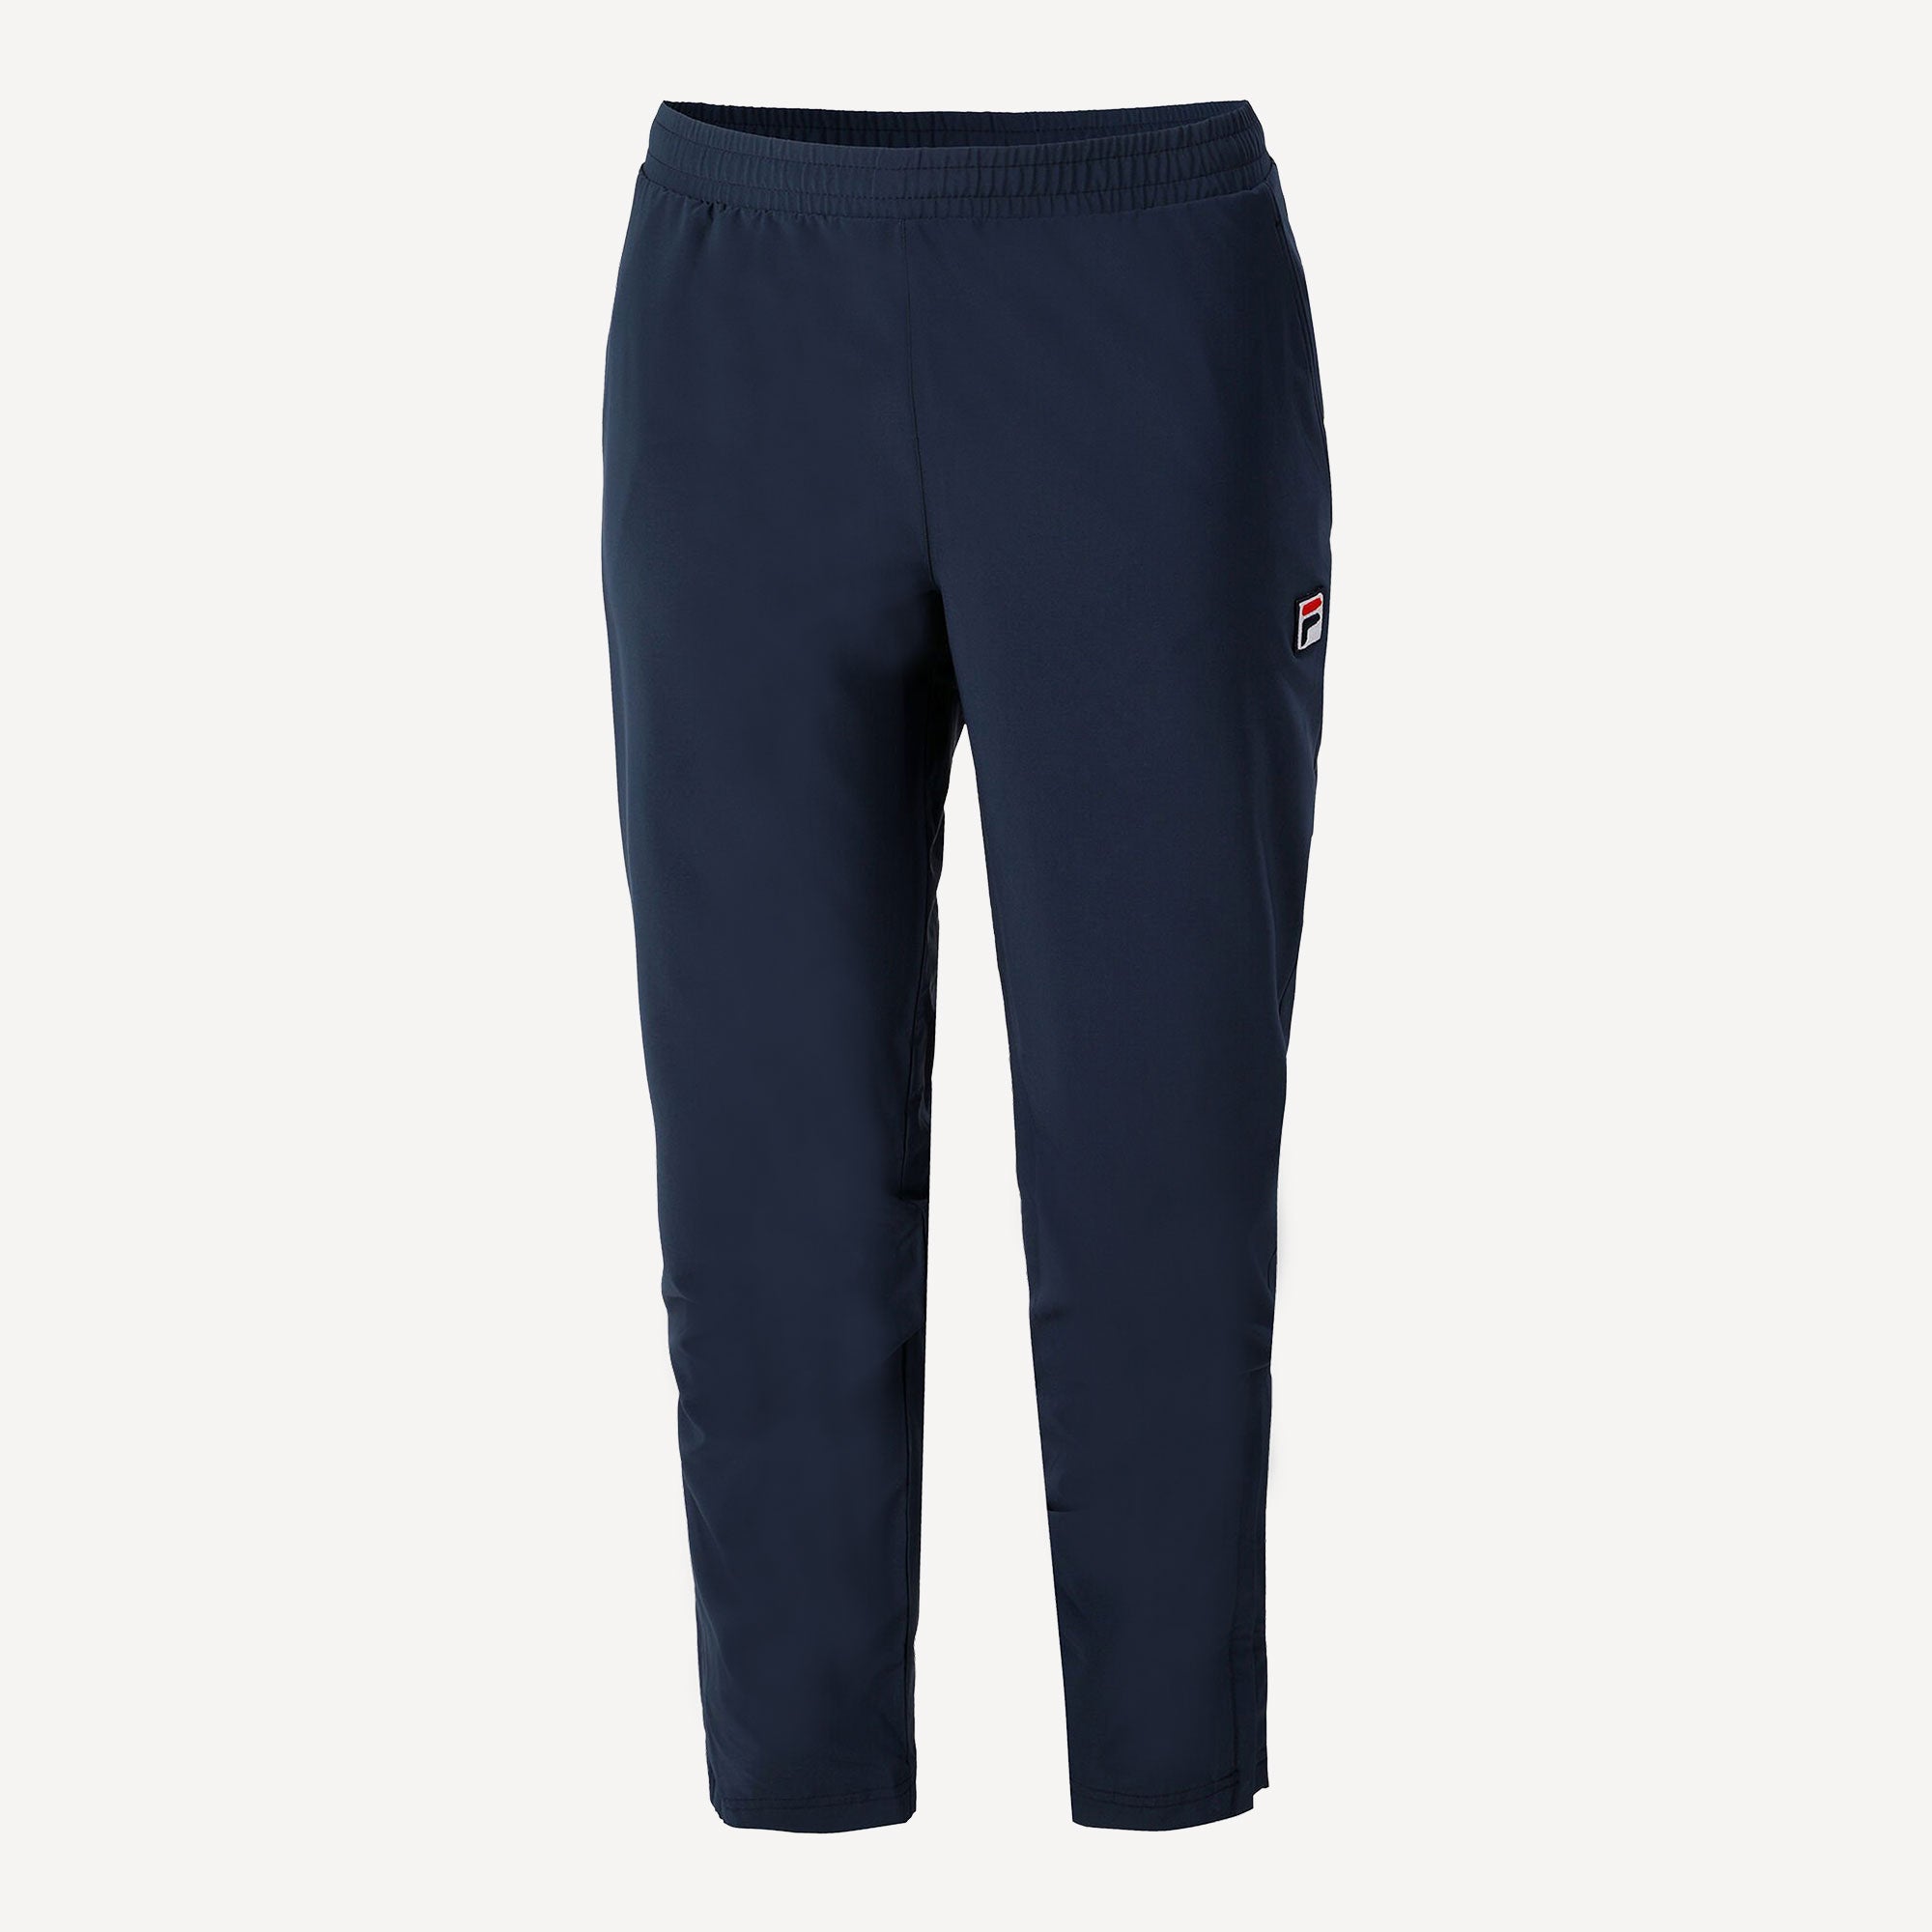 Fila Pro 3 Men's Tennis Pants Blue (1)